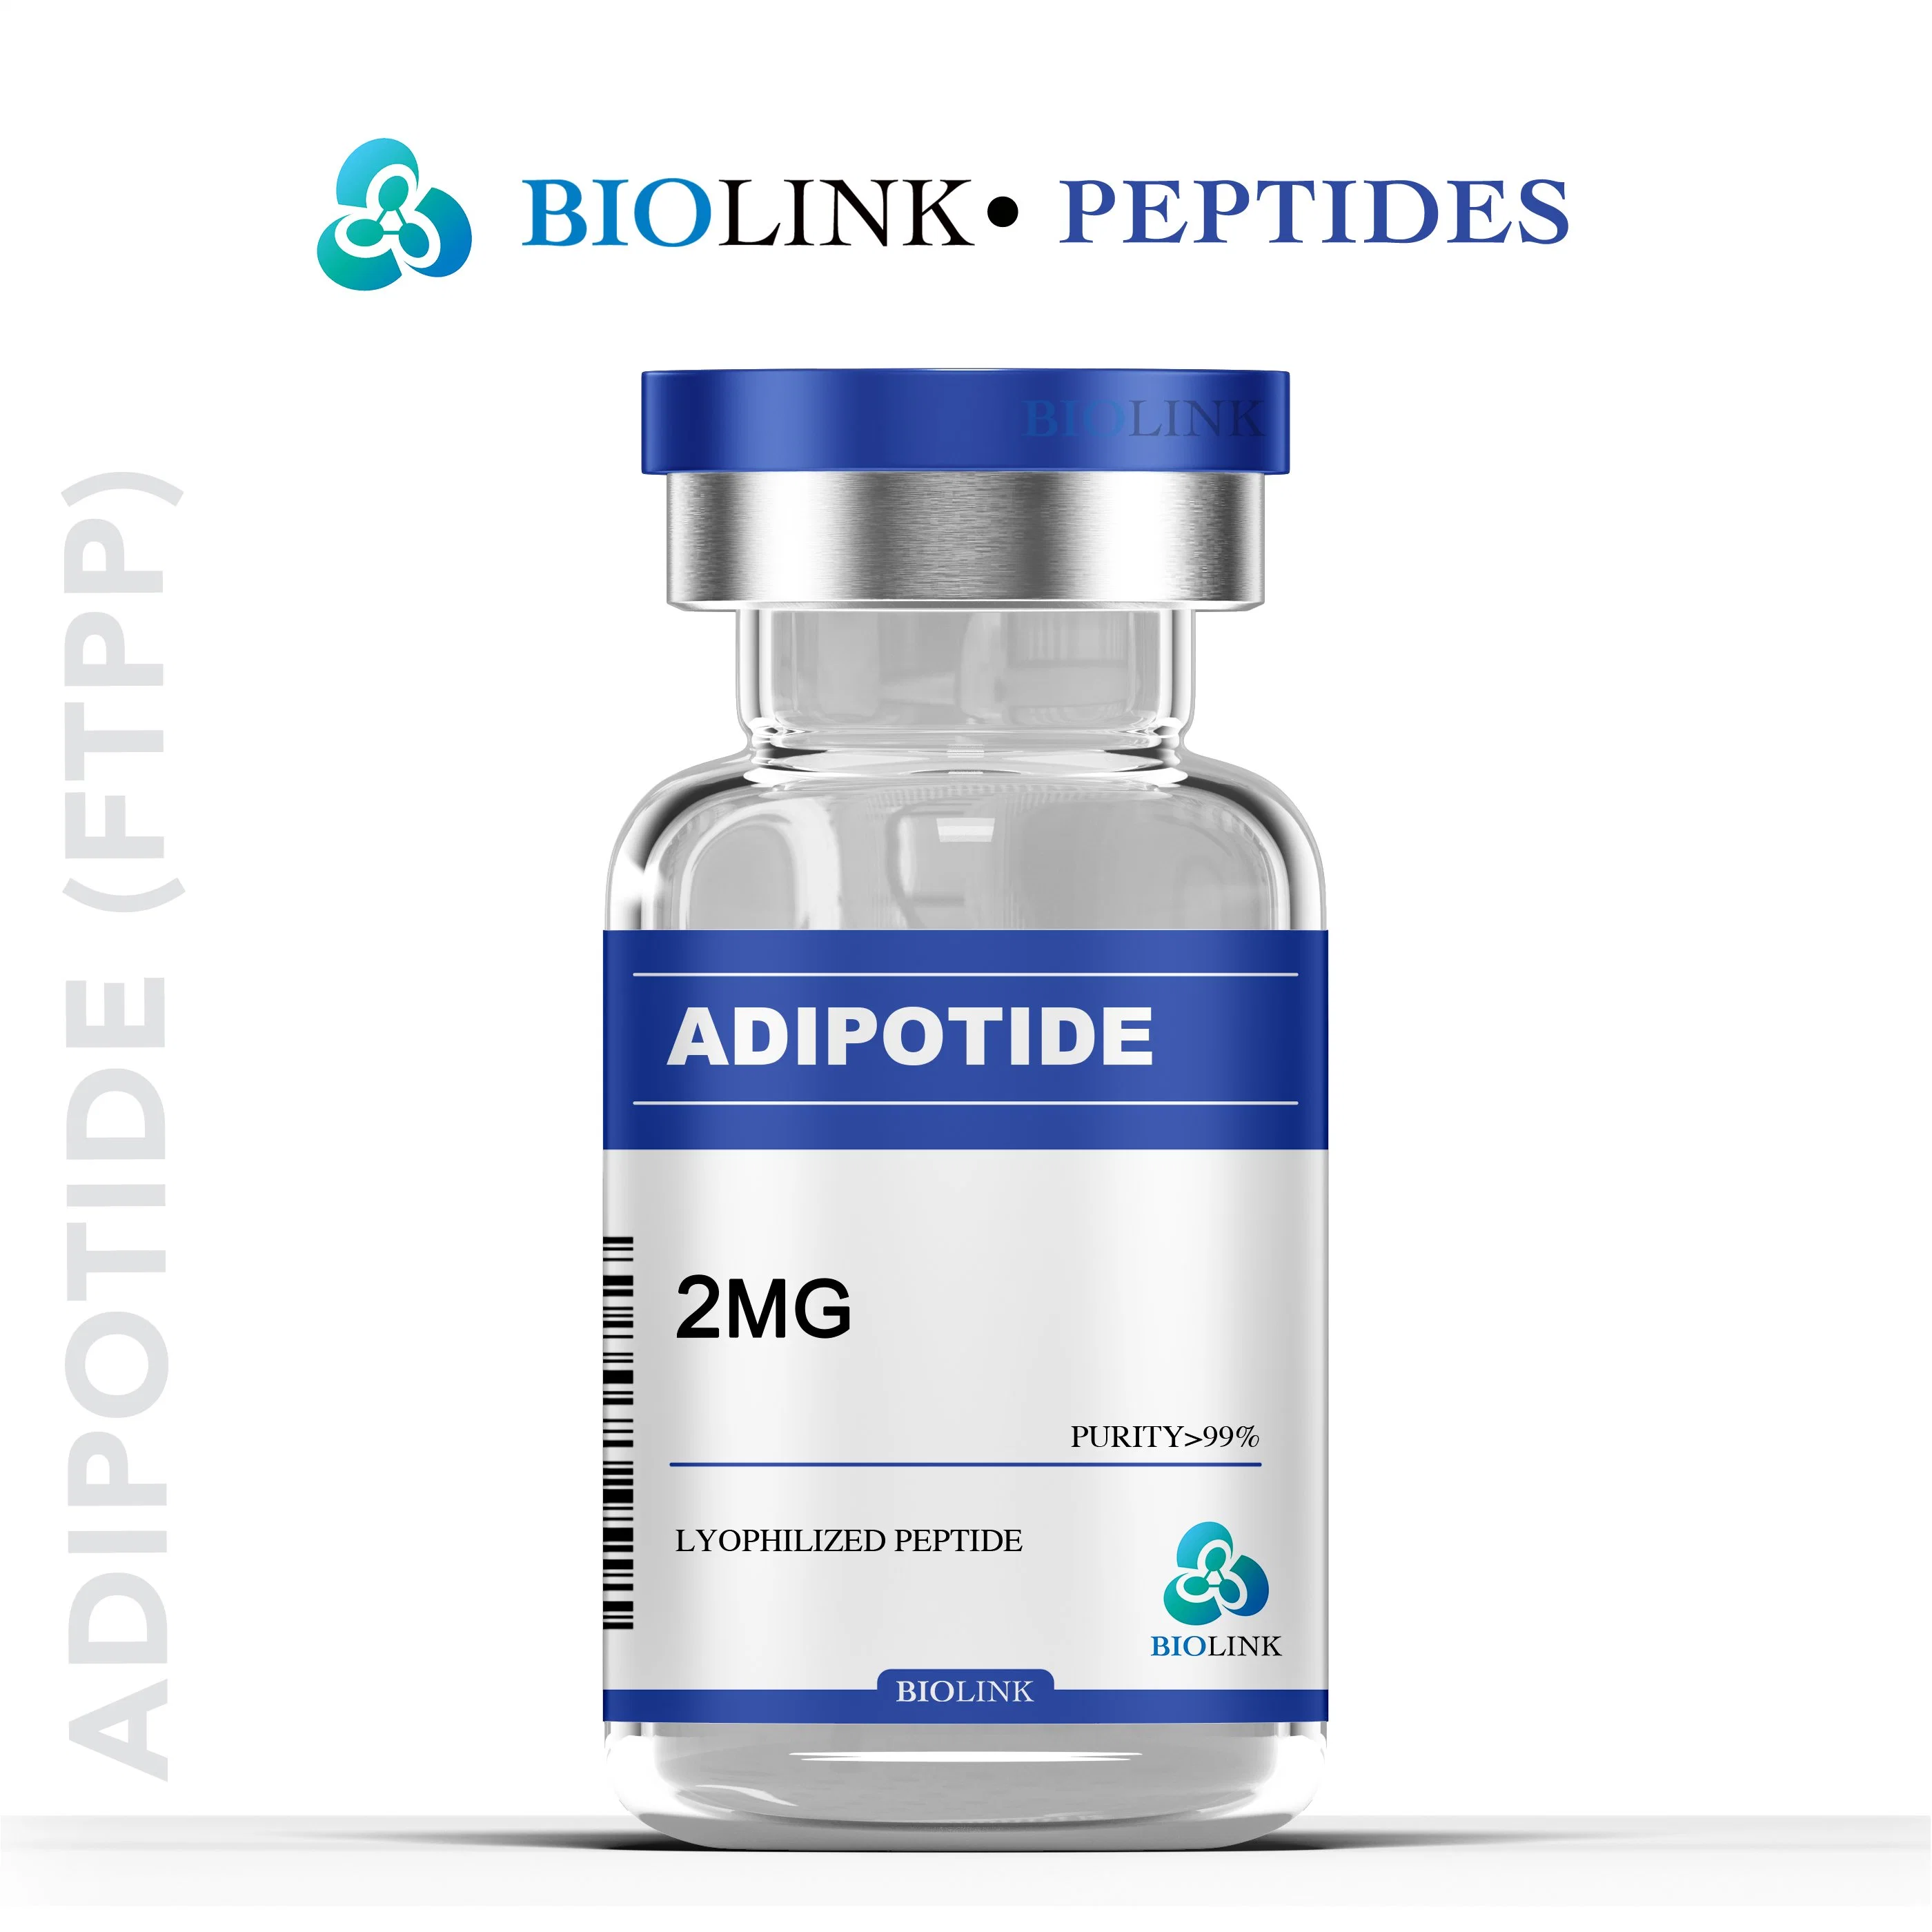 100% Pure GLP-1 Receptor Retatrutide Tirzepatide Semaglutide USA Biolink Peptides Warehouse CAS: 2381089-83-2